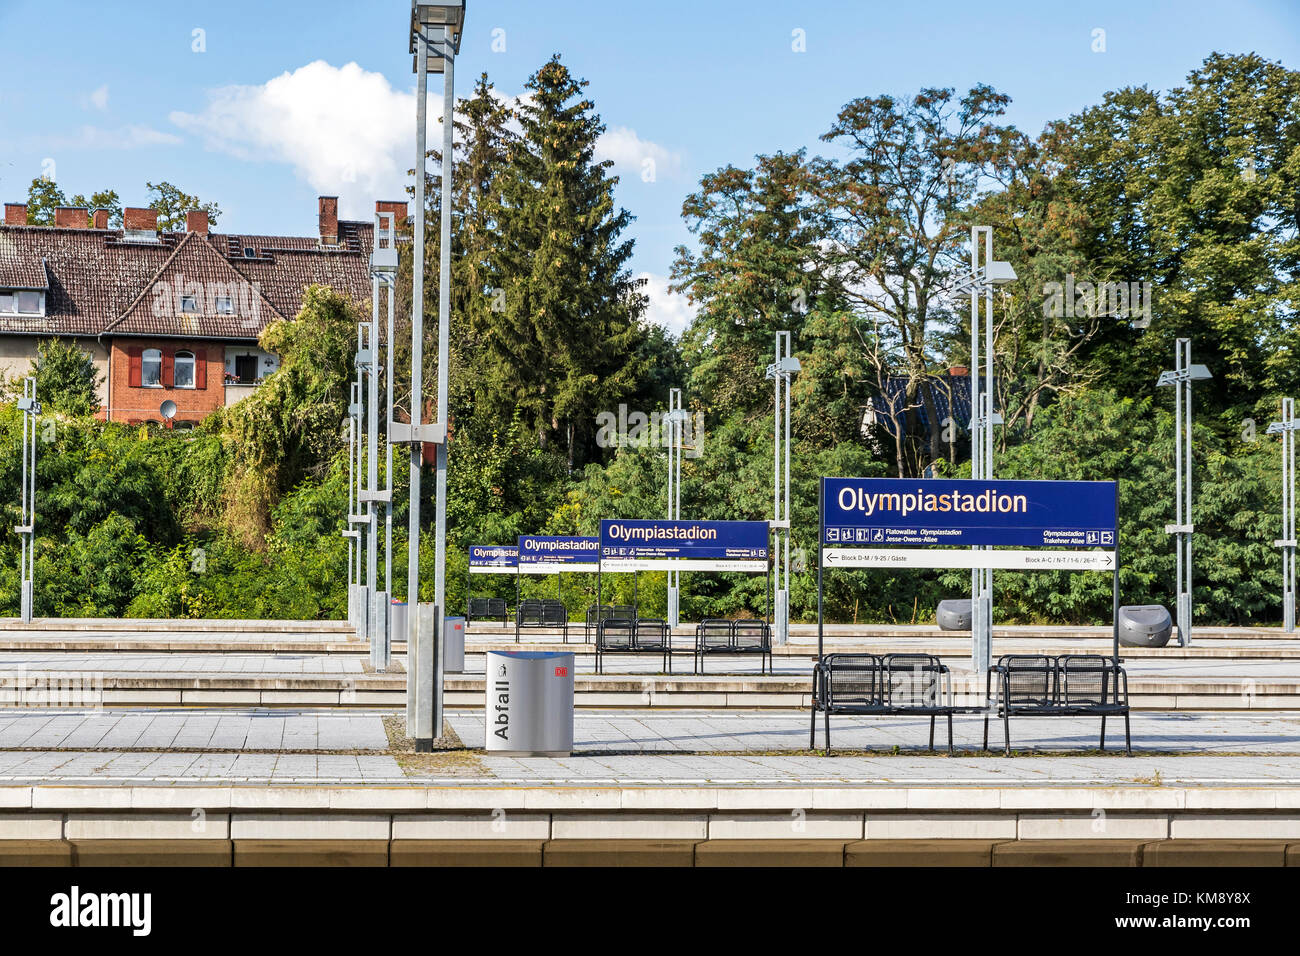 Empty platforms of Olympiastadion S-Bahn station in Berlin, Germany Stock Photo